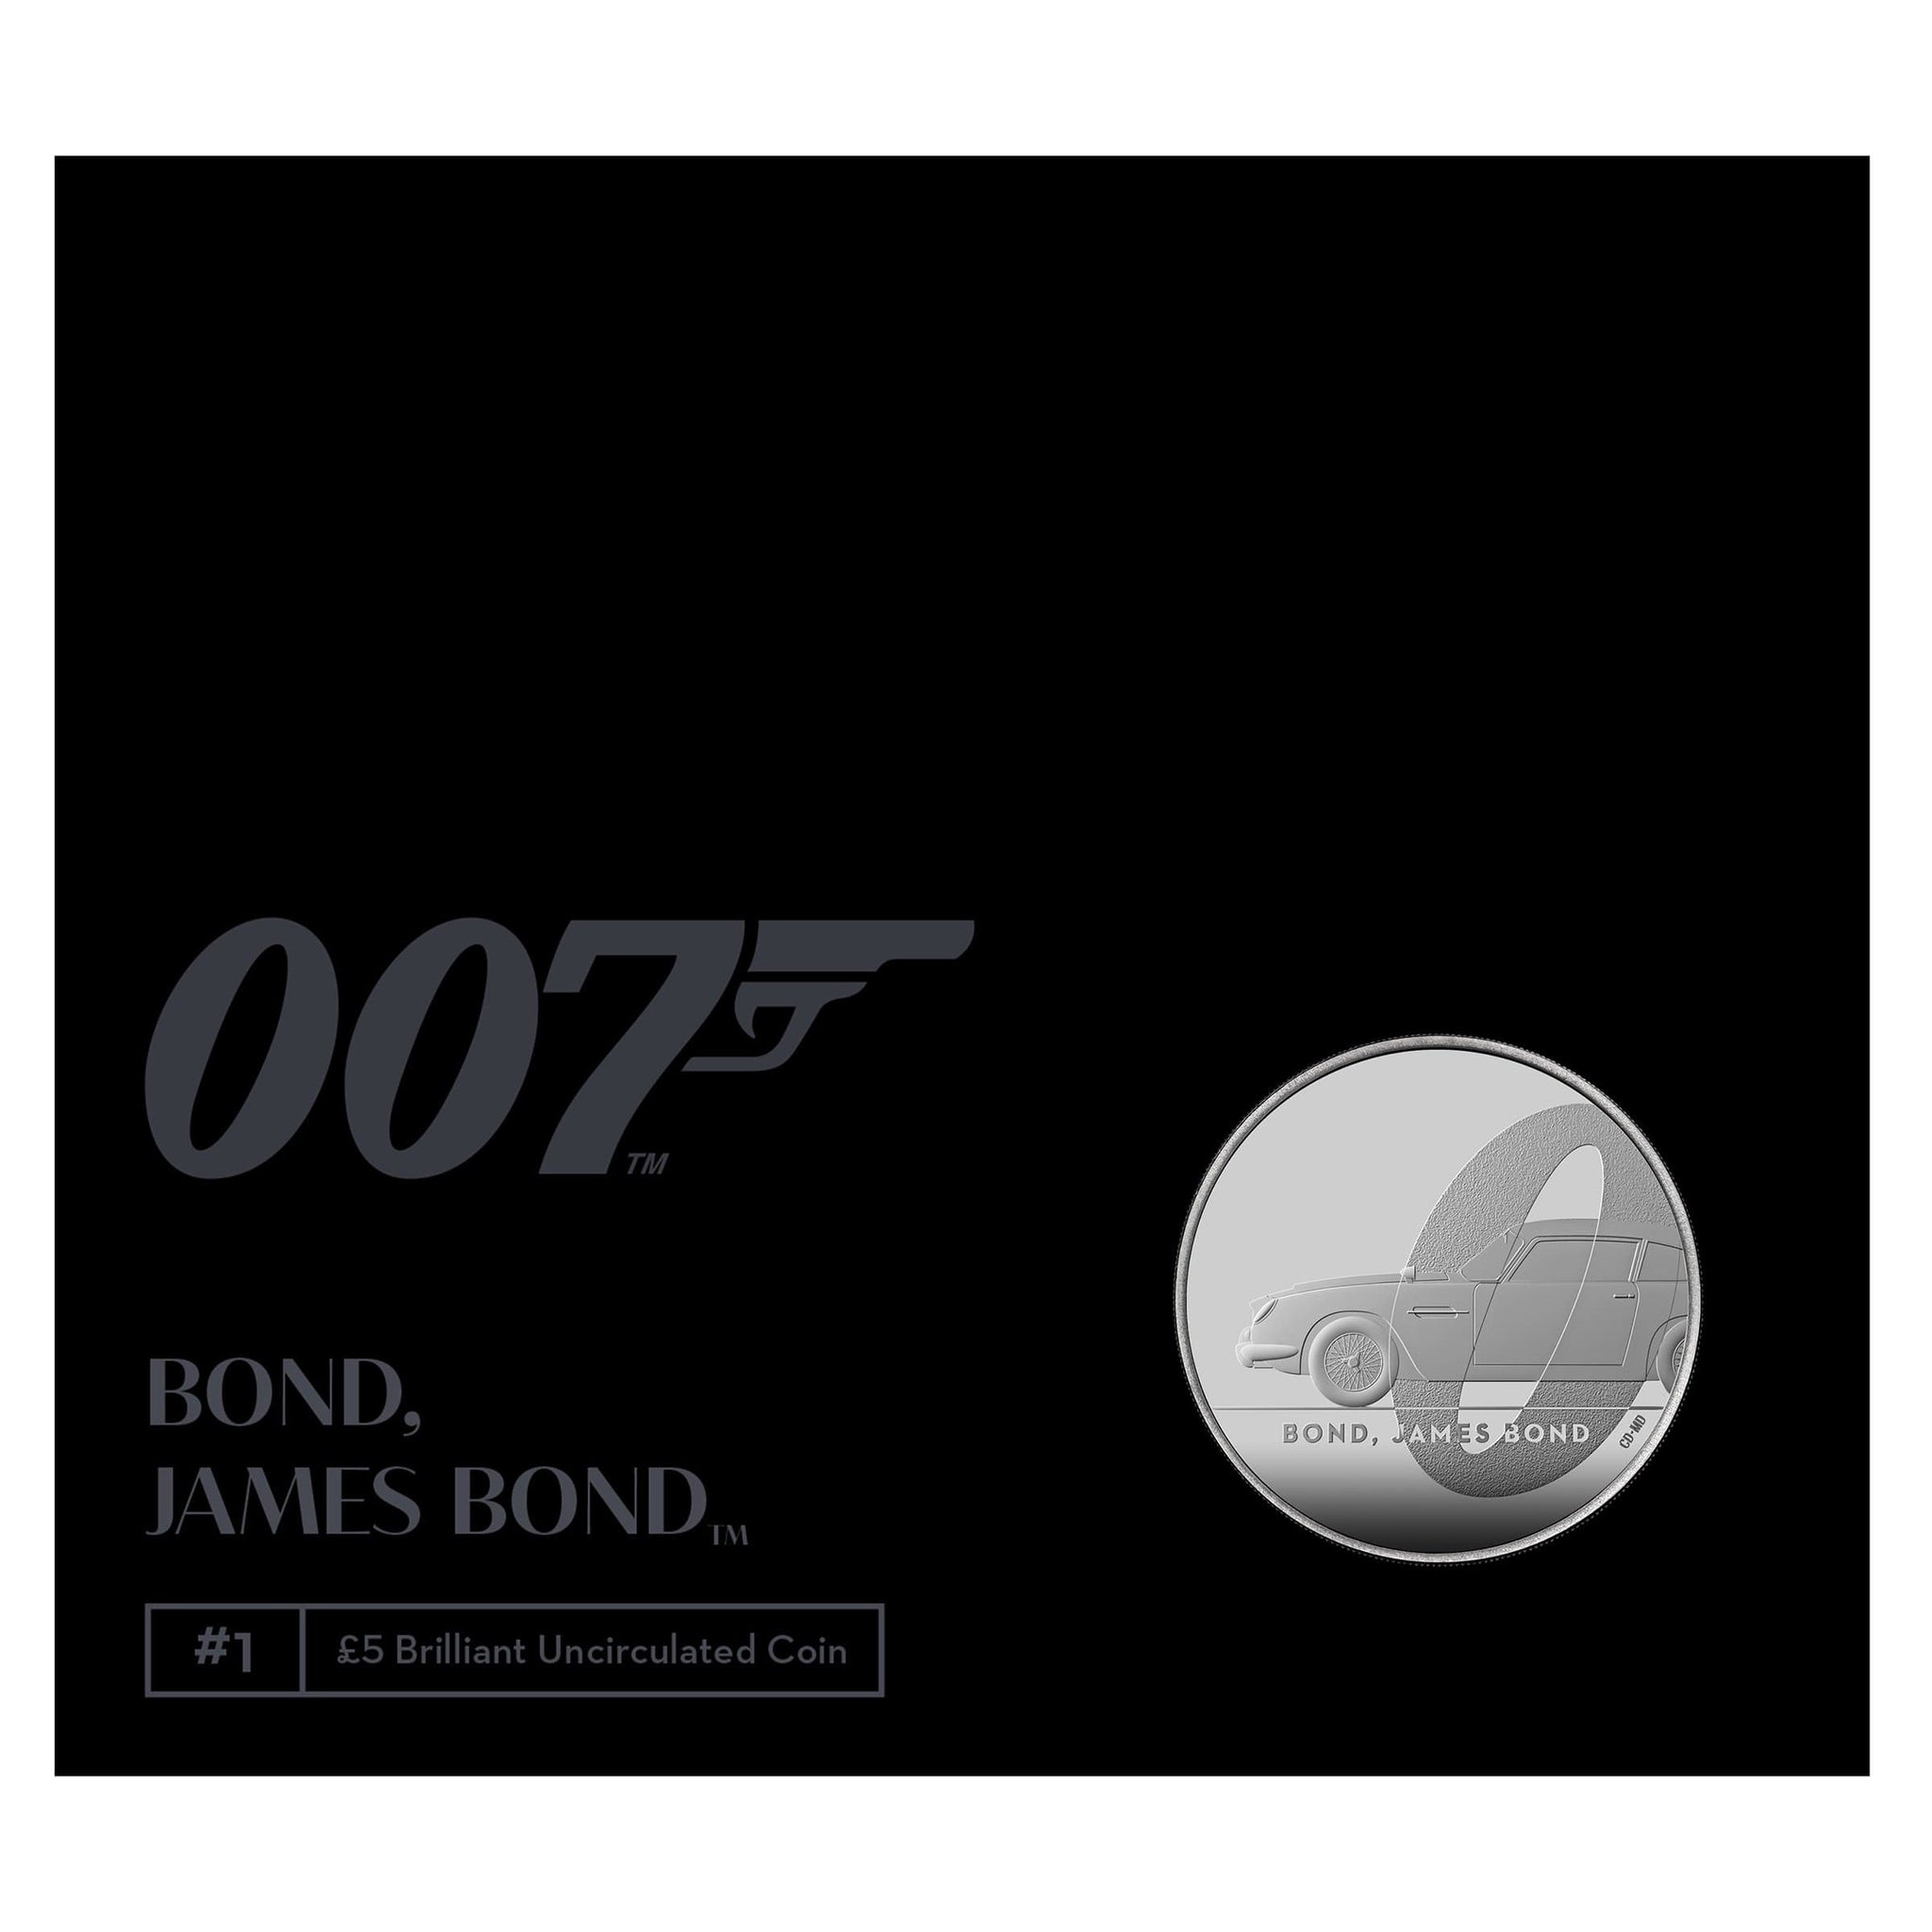 James_Bond_1_Bond__James_Bond_2020_UK__5_Crown_Brilliant_Uncirculated_Coin_in_pack_-_UK20B1BU_2048x2048.jpg?v=1582617053